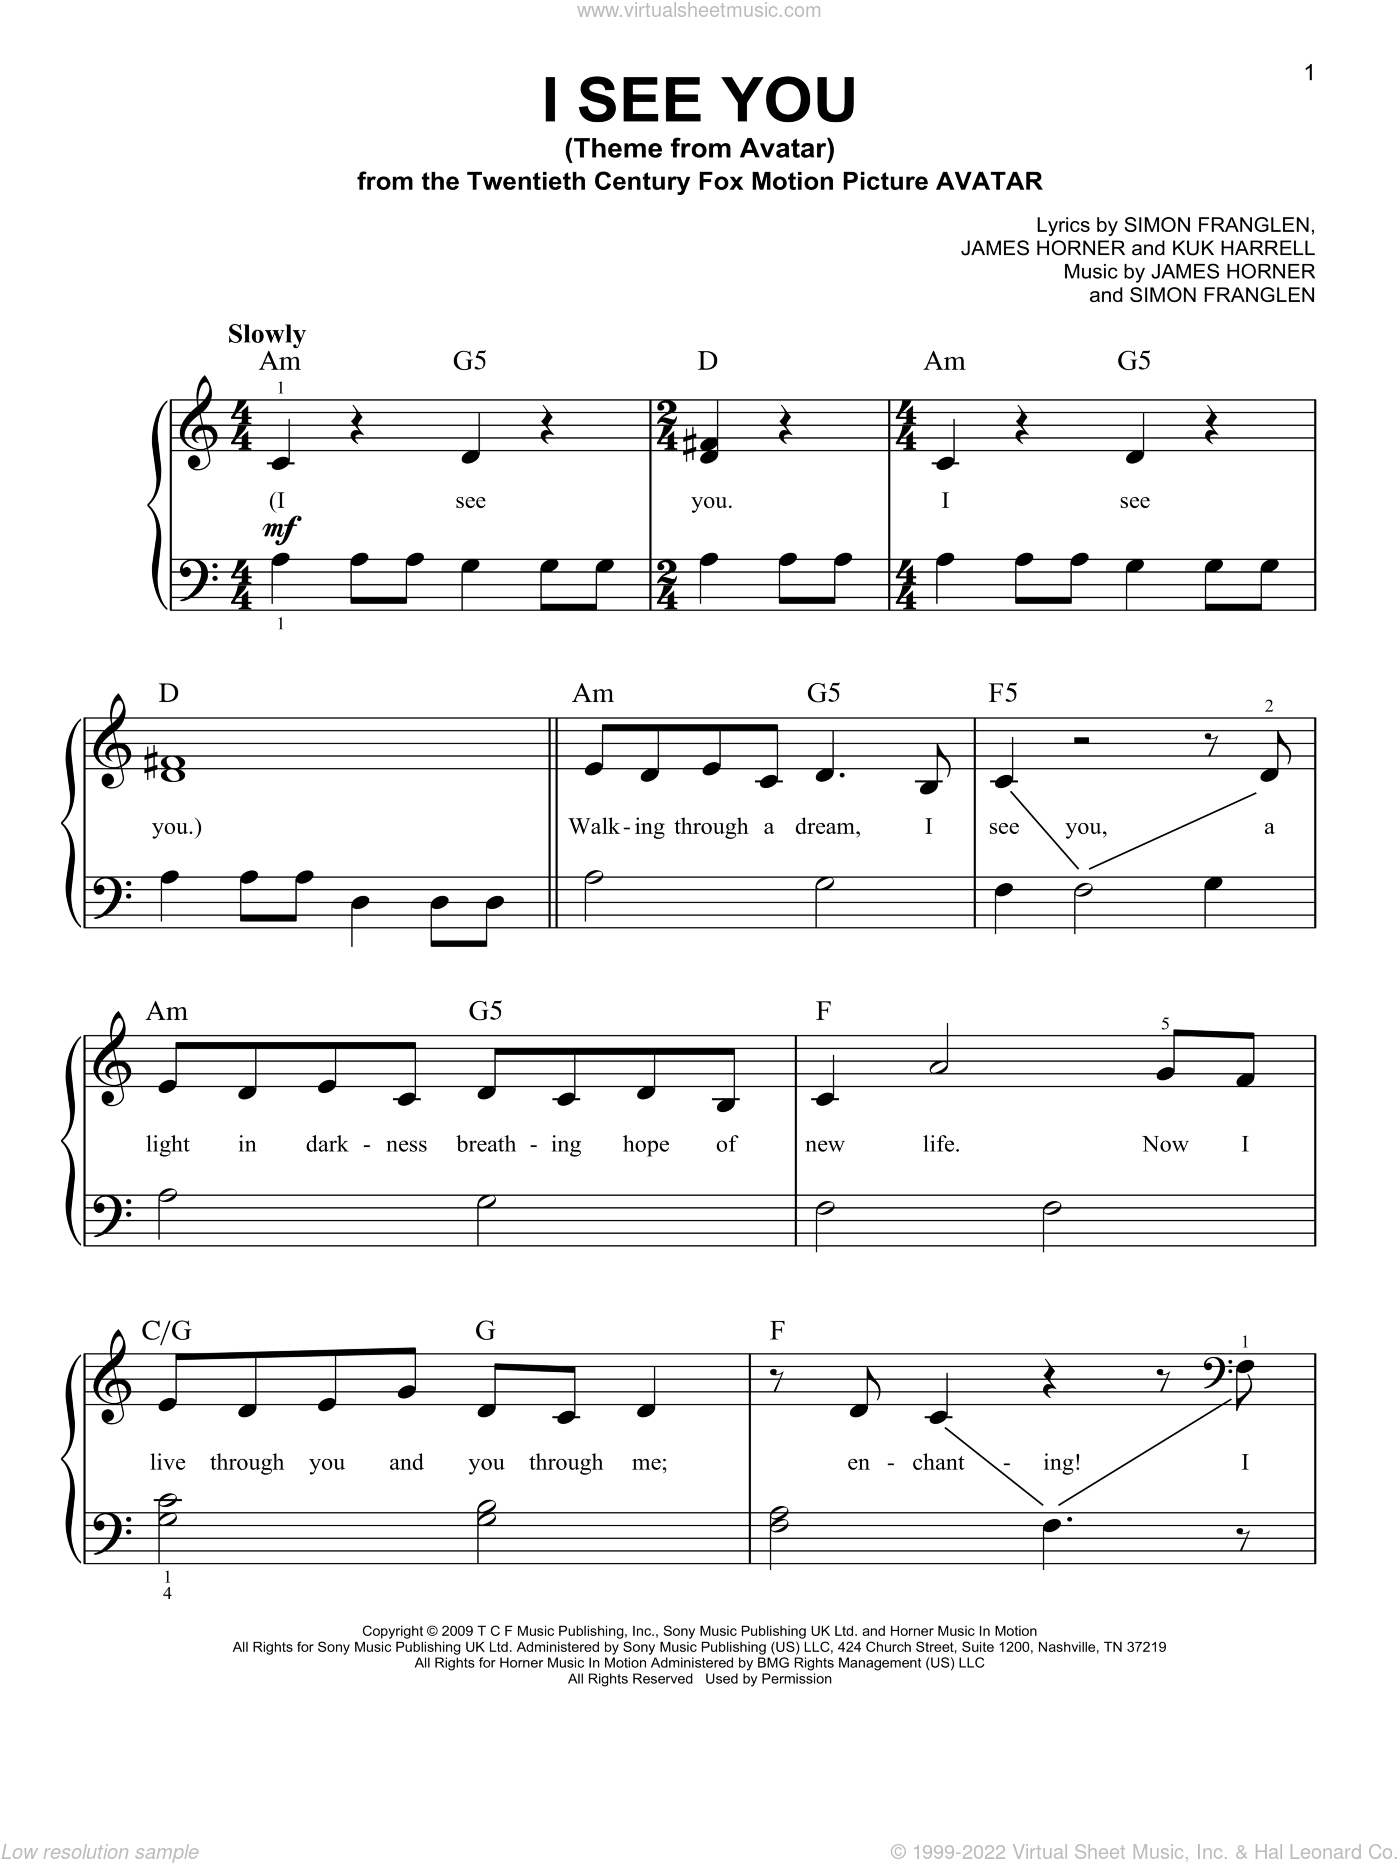  Jeremy ZuckermanAvatar The Last Airbender Medley Sheet Music pdf   Free Score Download 